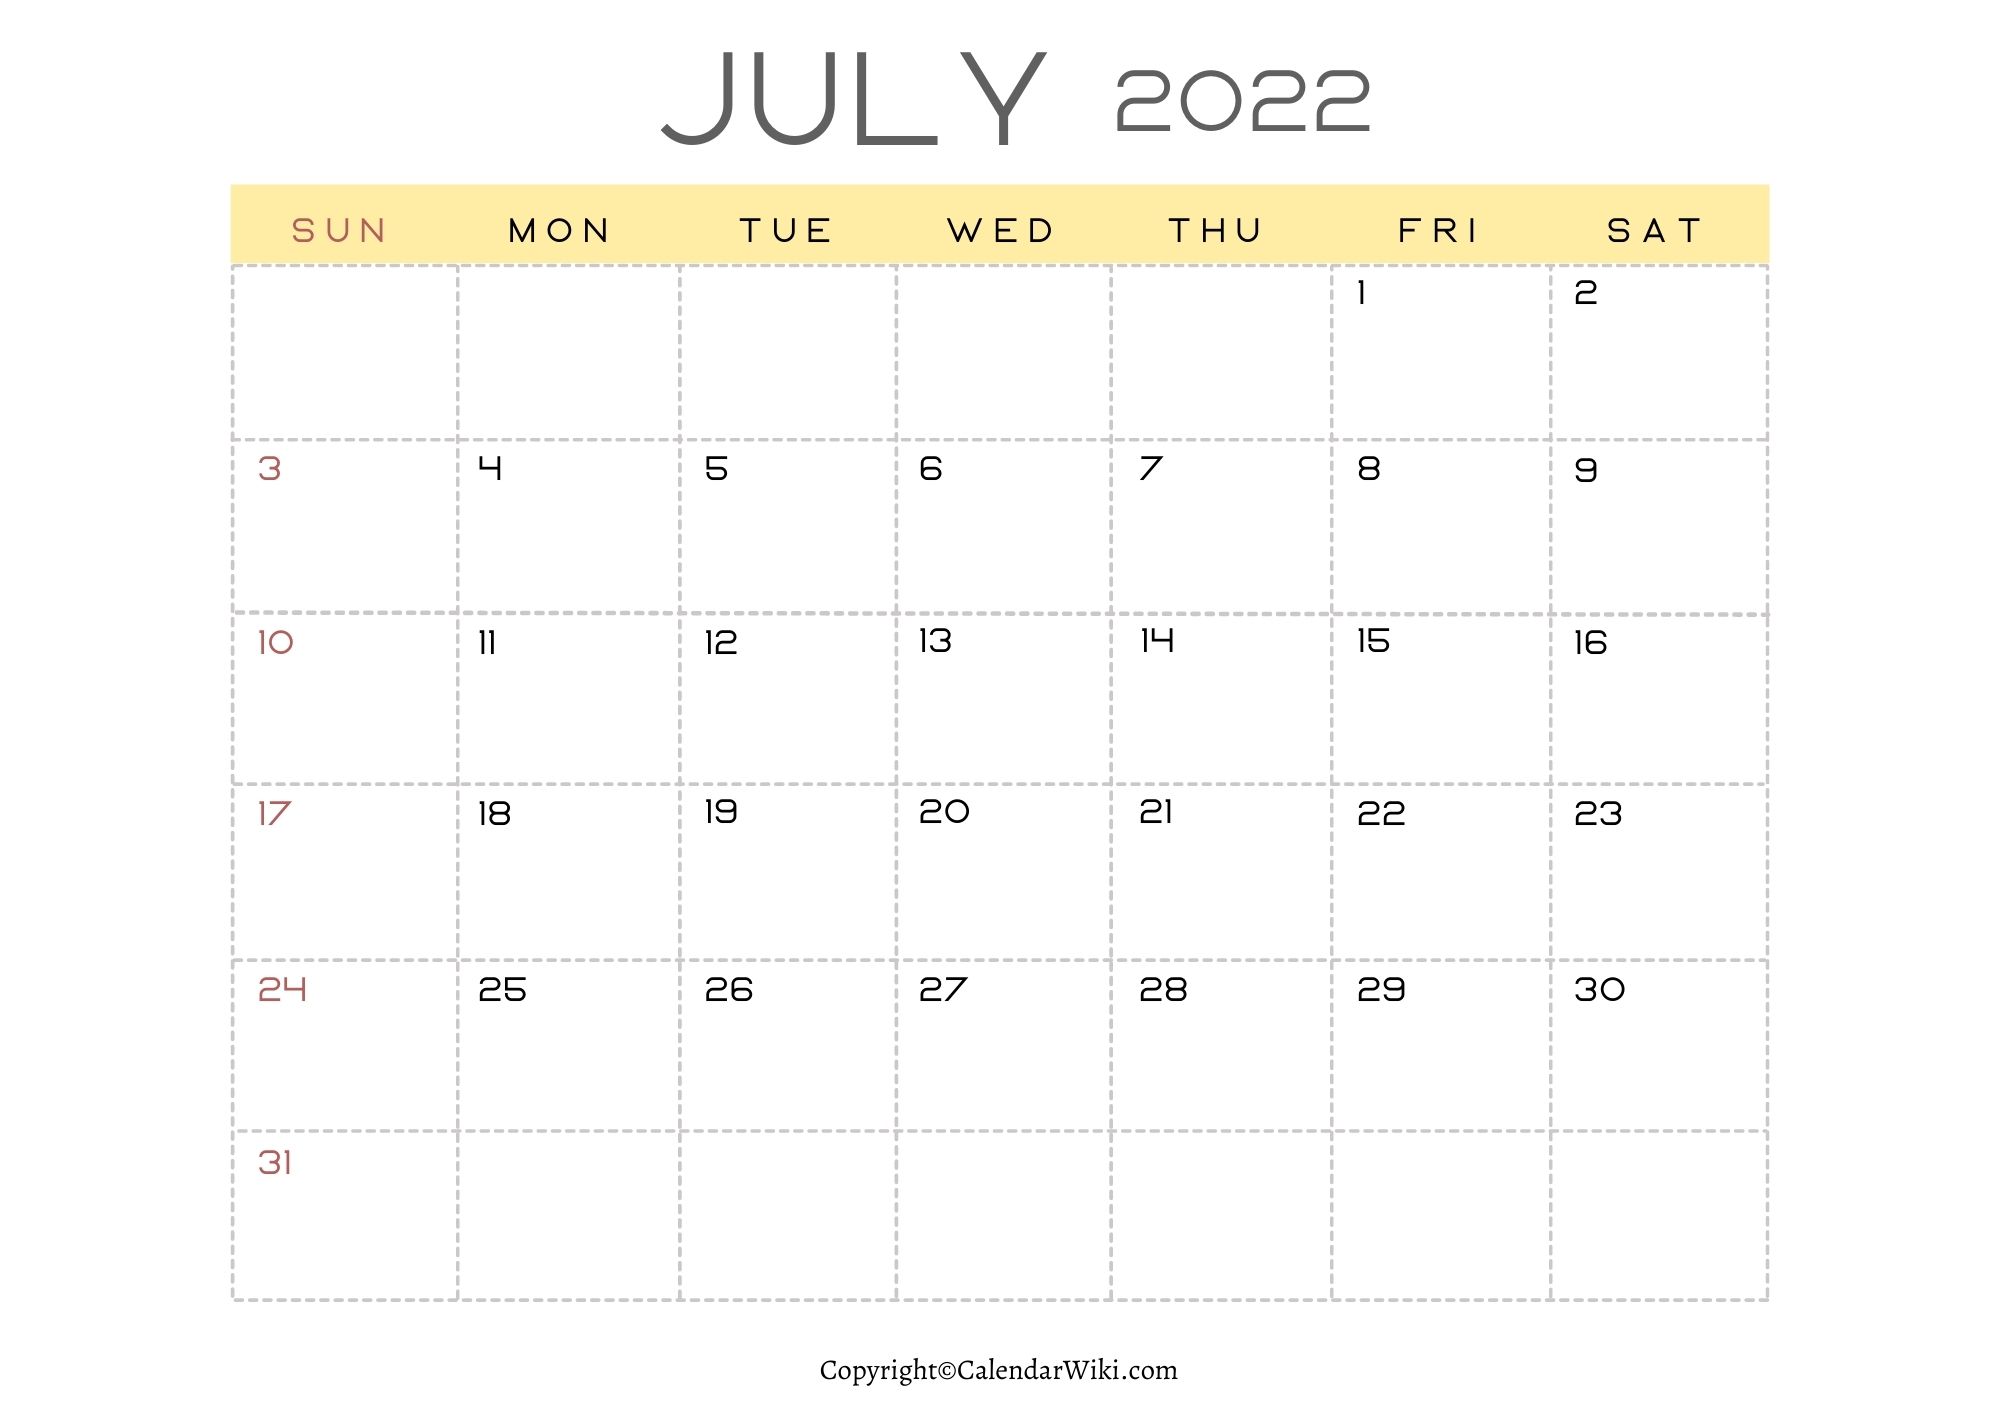 2022 July Calendar